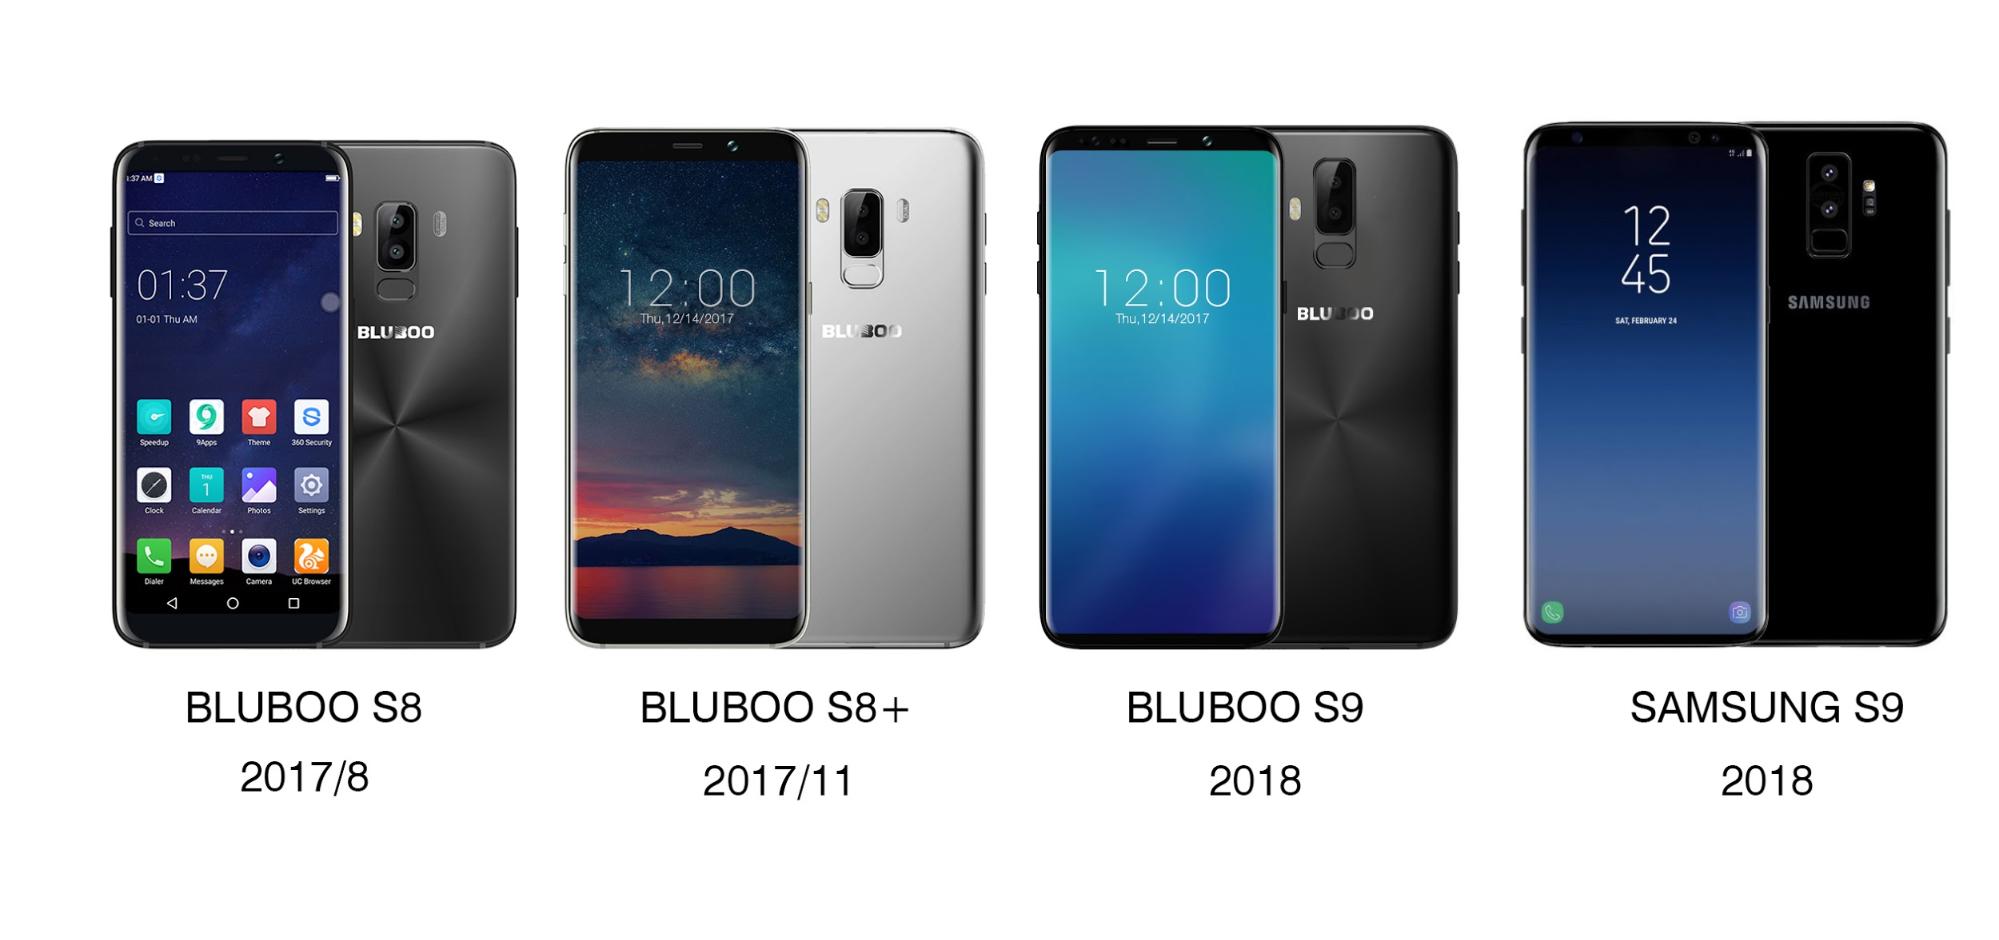 Samsung Galaxy S9 получит конкурента в лице новинки  BLUBOO S9-2